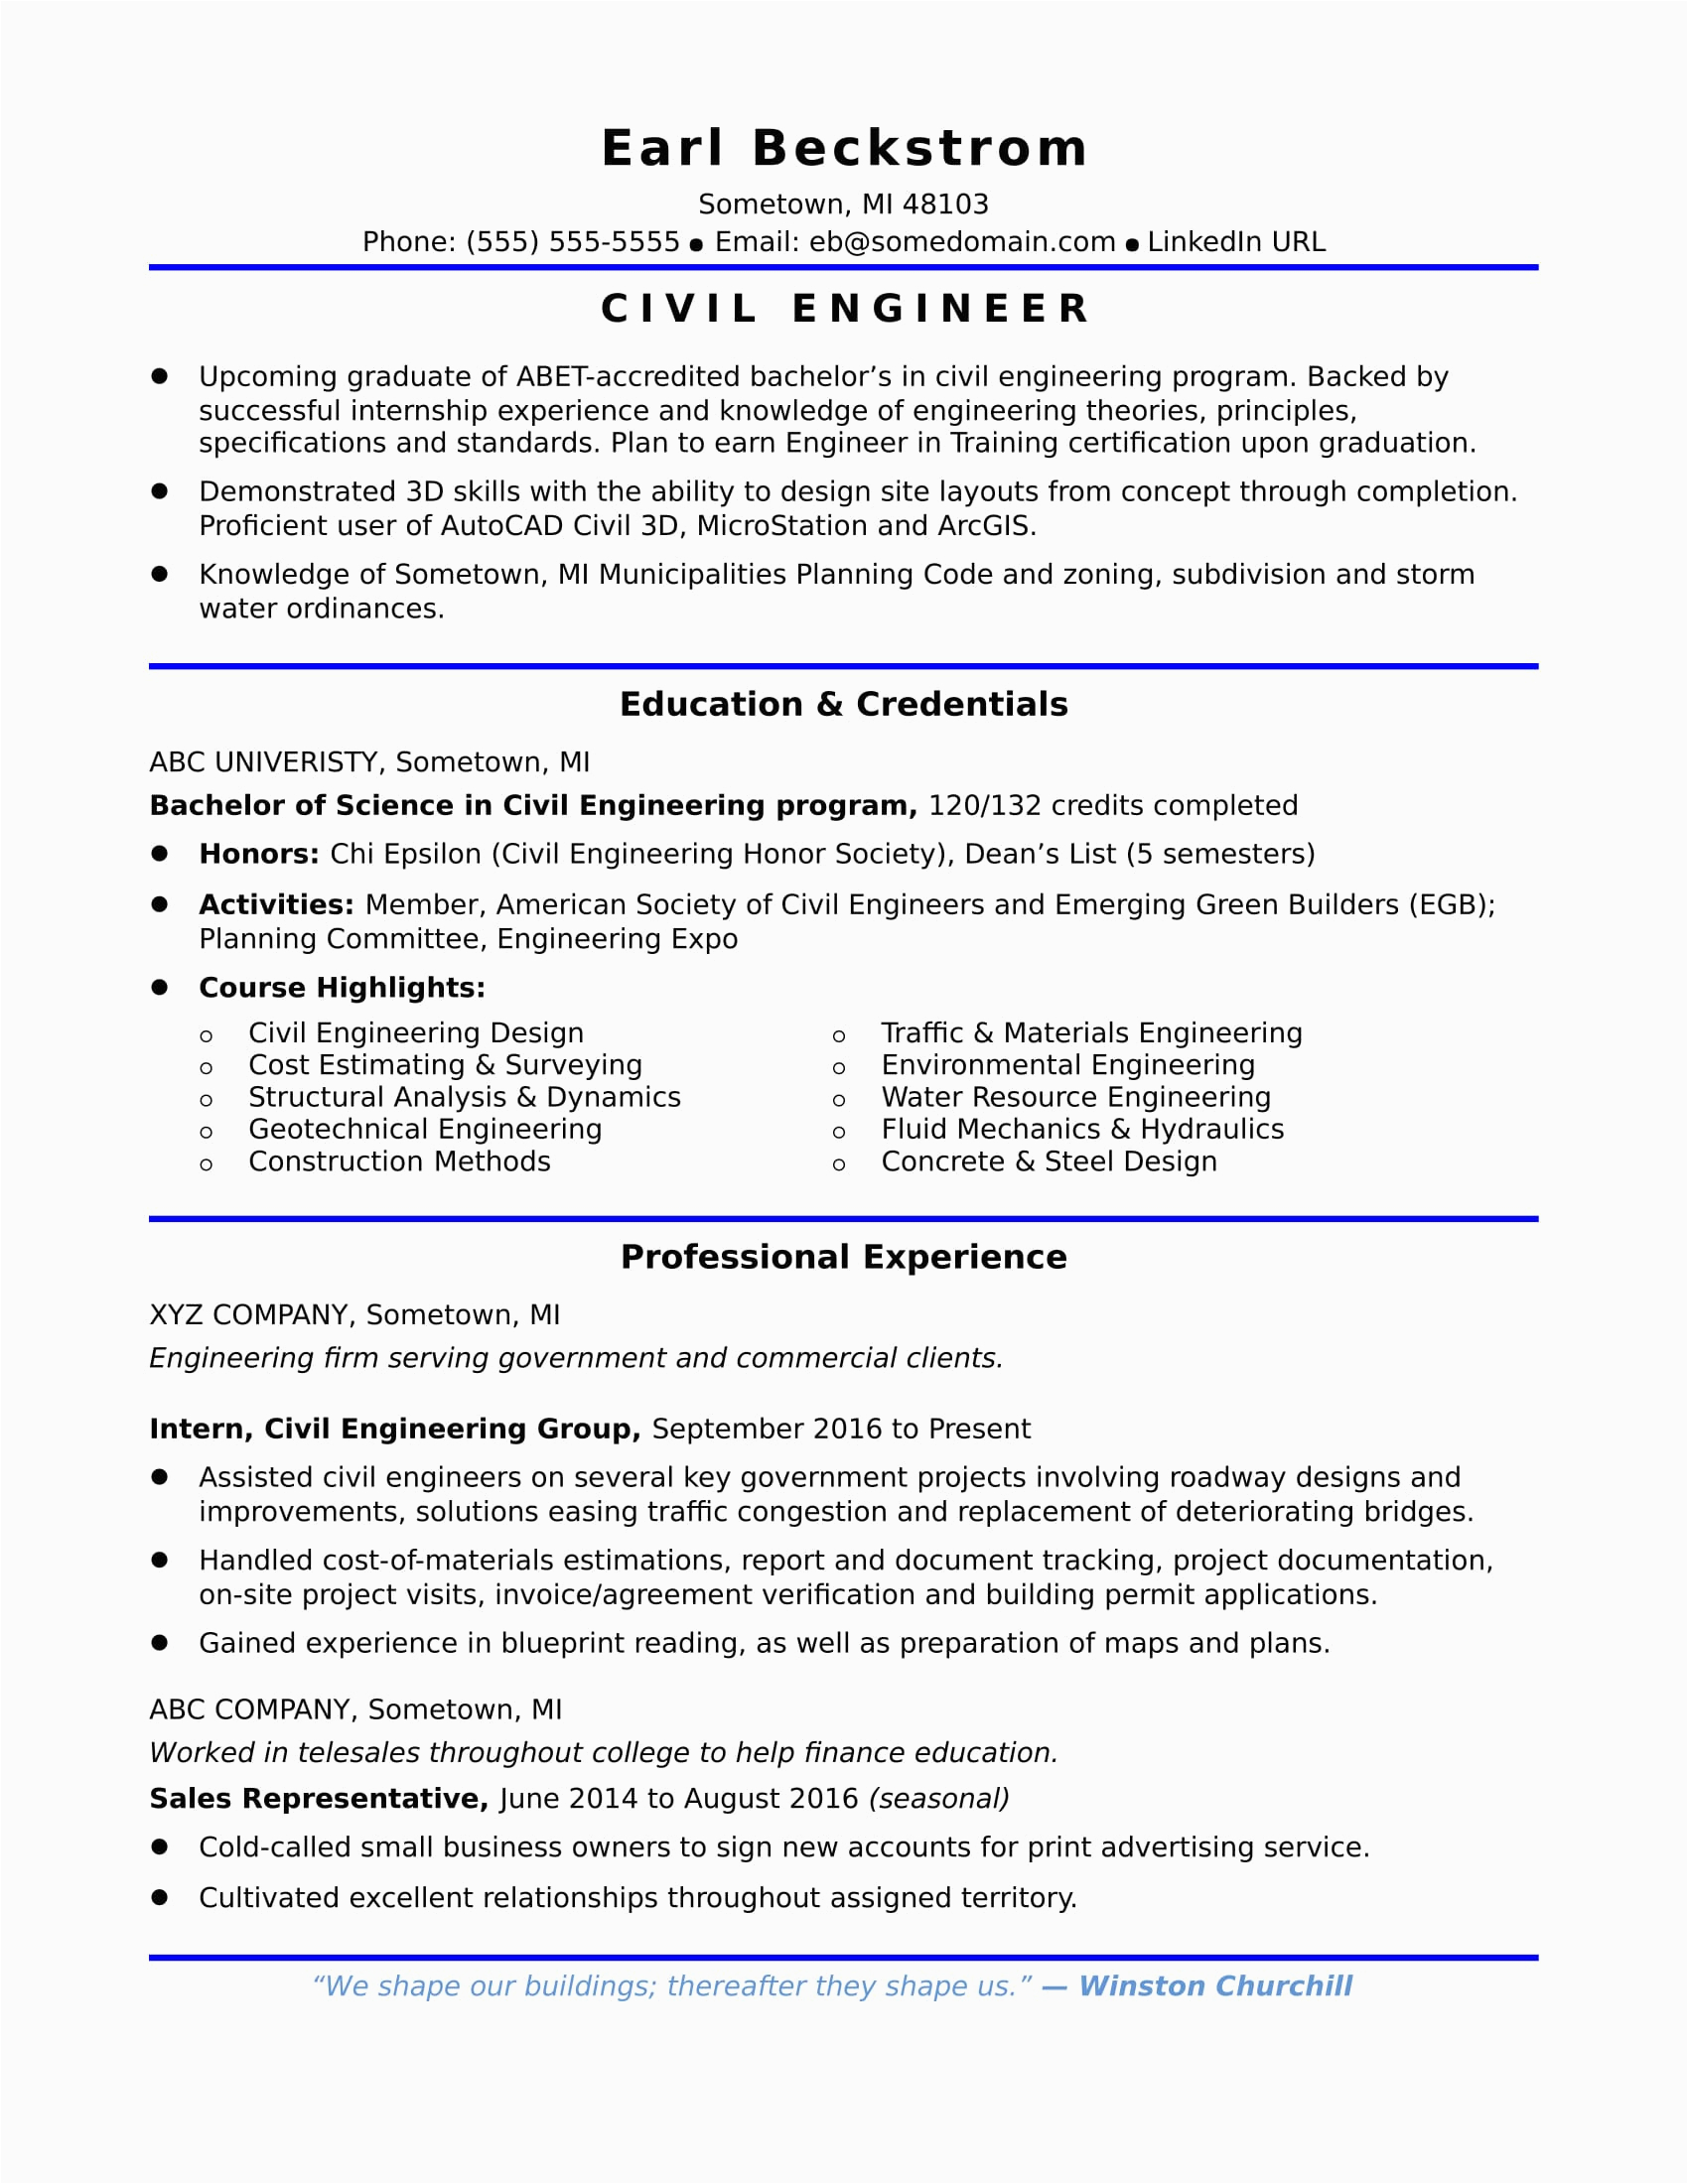 Entry Level Job with Internship Resume Sample Sample Resume for Civil Engineering Internship Planners & Engineers